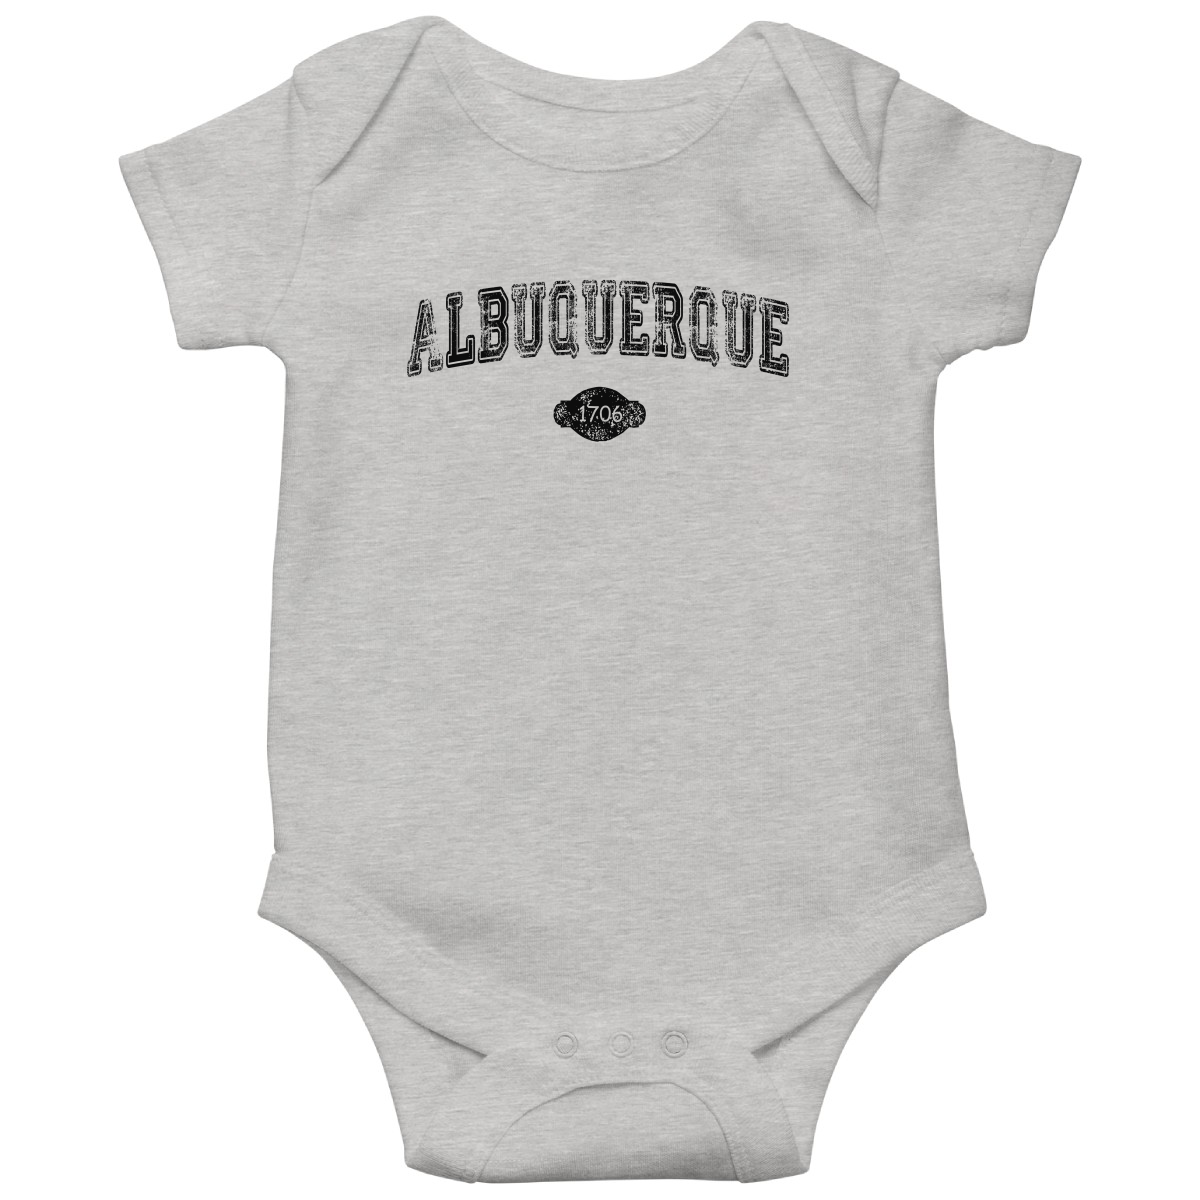 Albuquerque 1706 Represent Baby Bodysuits | Gray